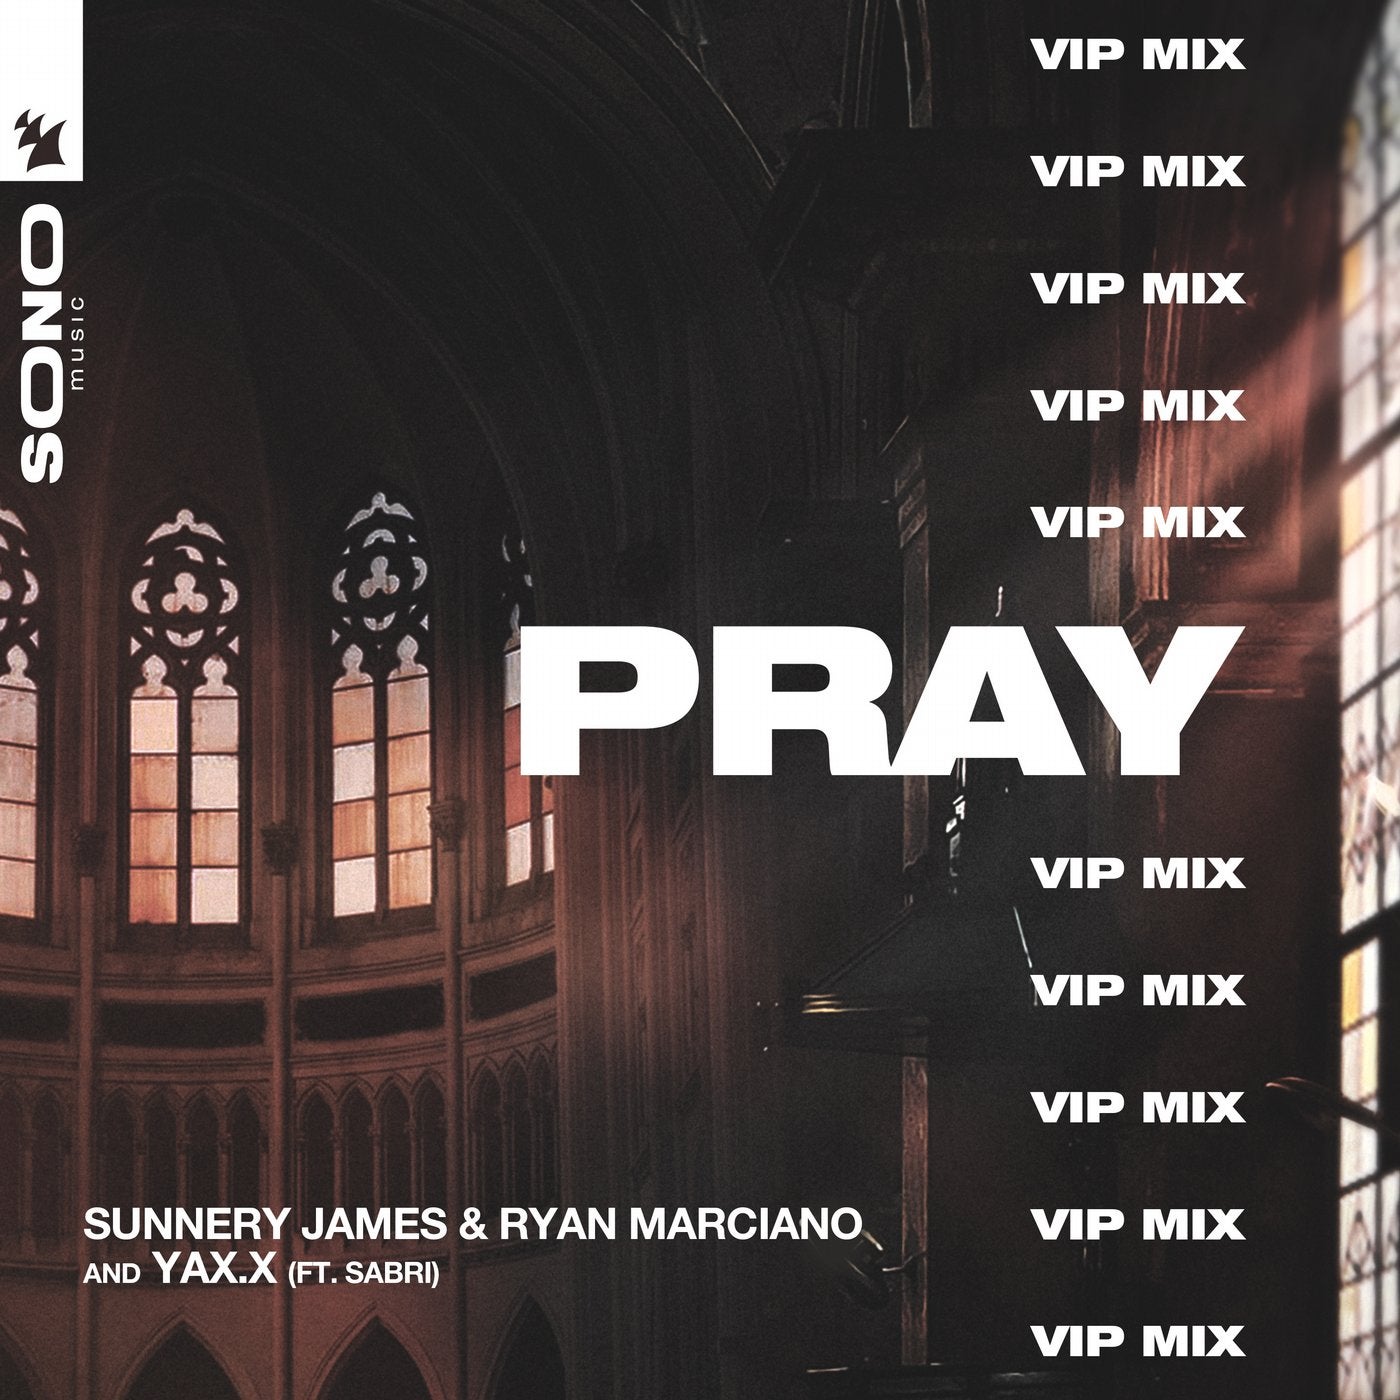 PRAY - VIP Mix